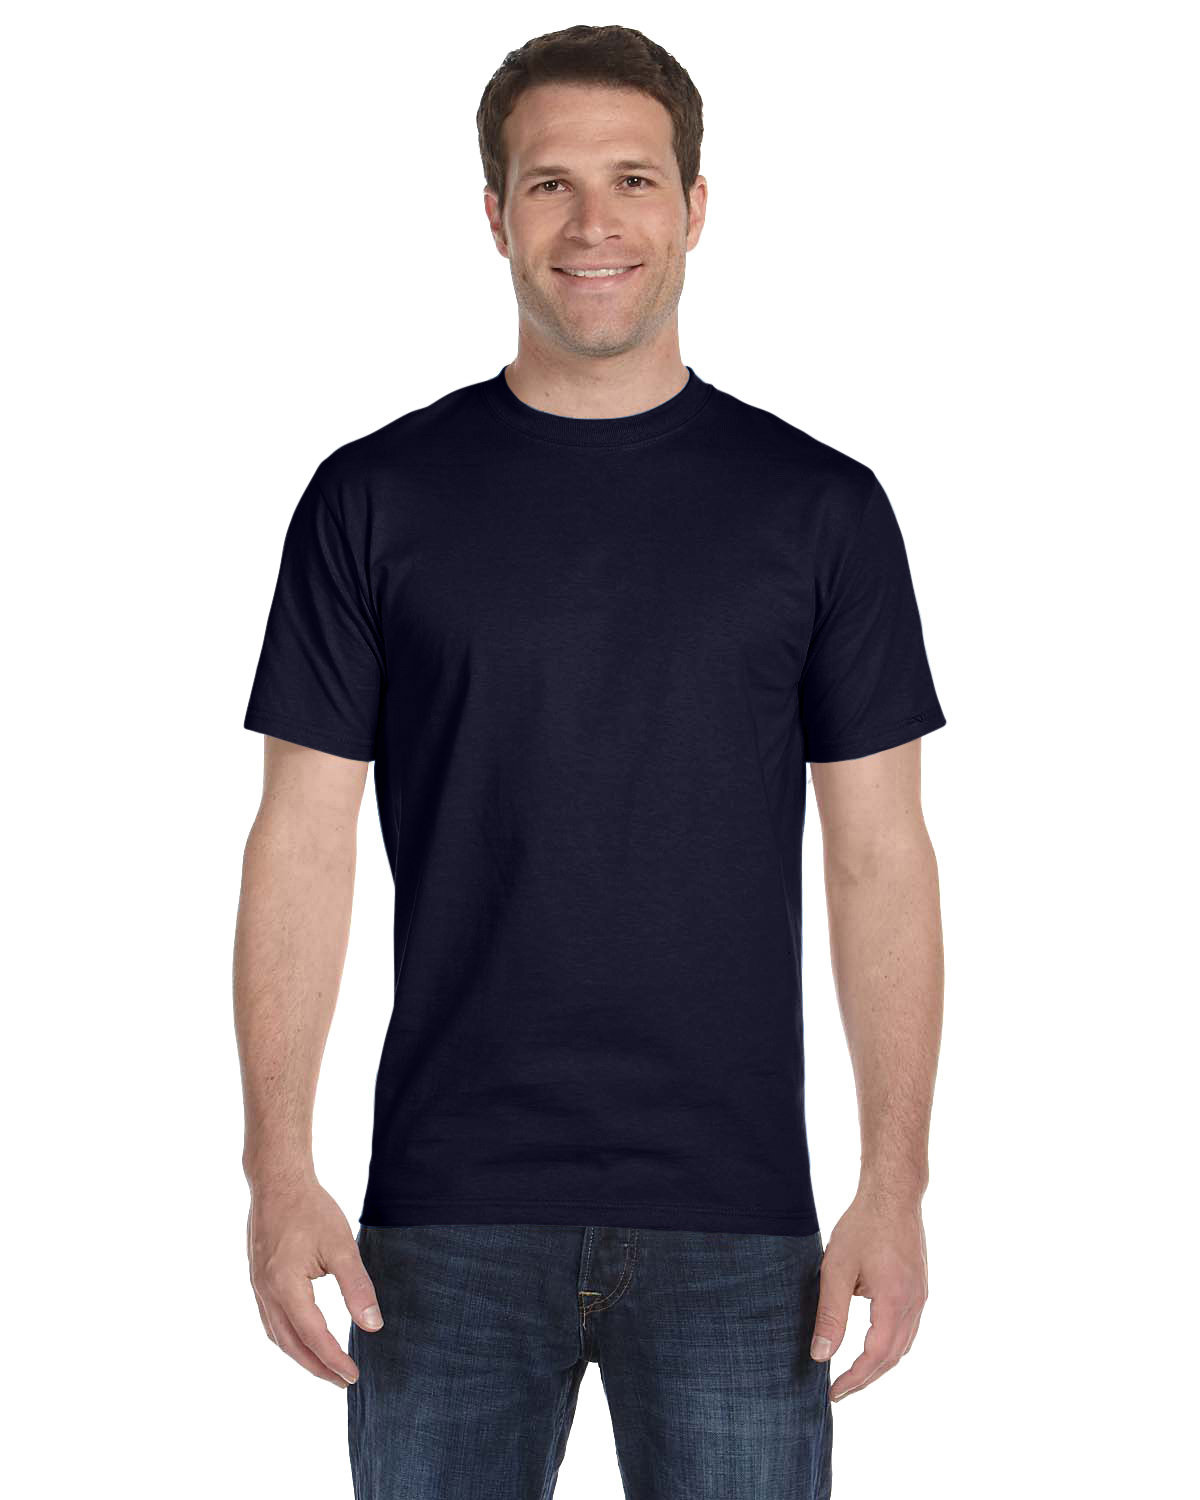 Hanes Unisex 5.2 oz., Comfortsoft® Cotton T-Shirt ATHLETIC NAVY 